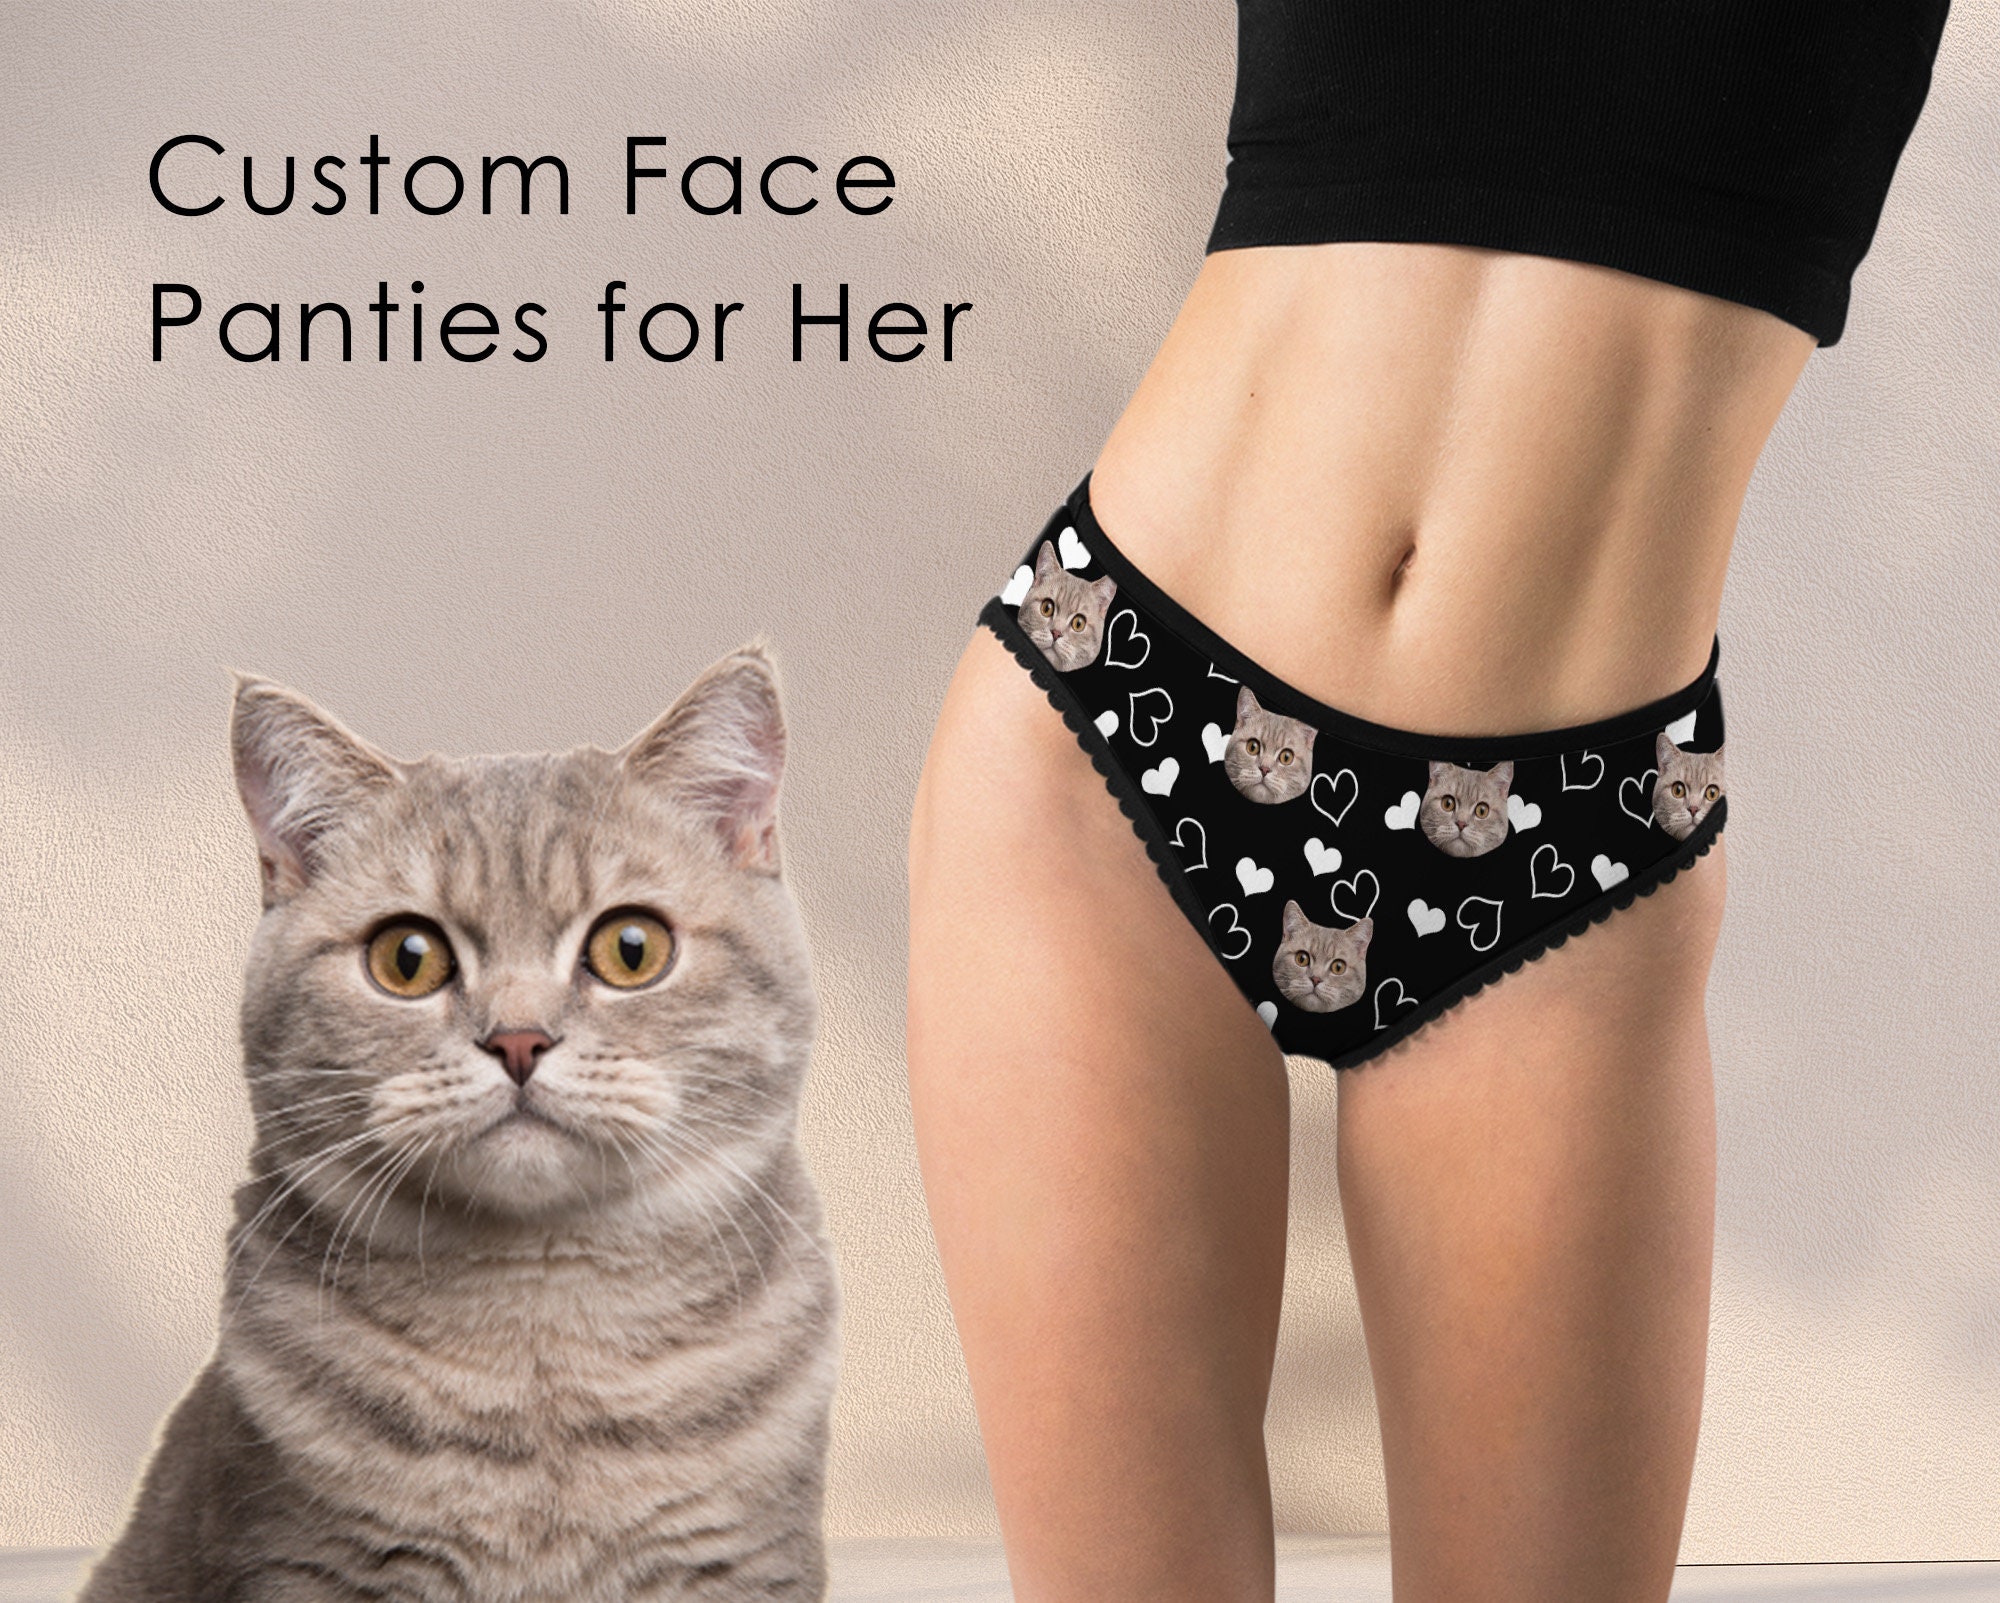 Meow Chicka Cat Underwear - Low-Rise Underwear